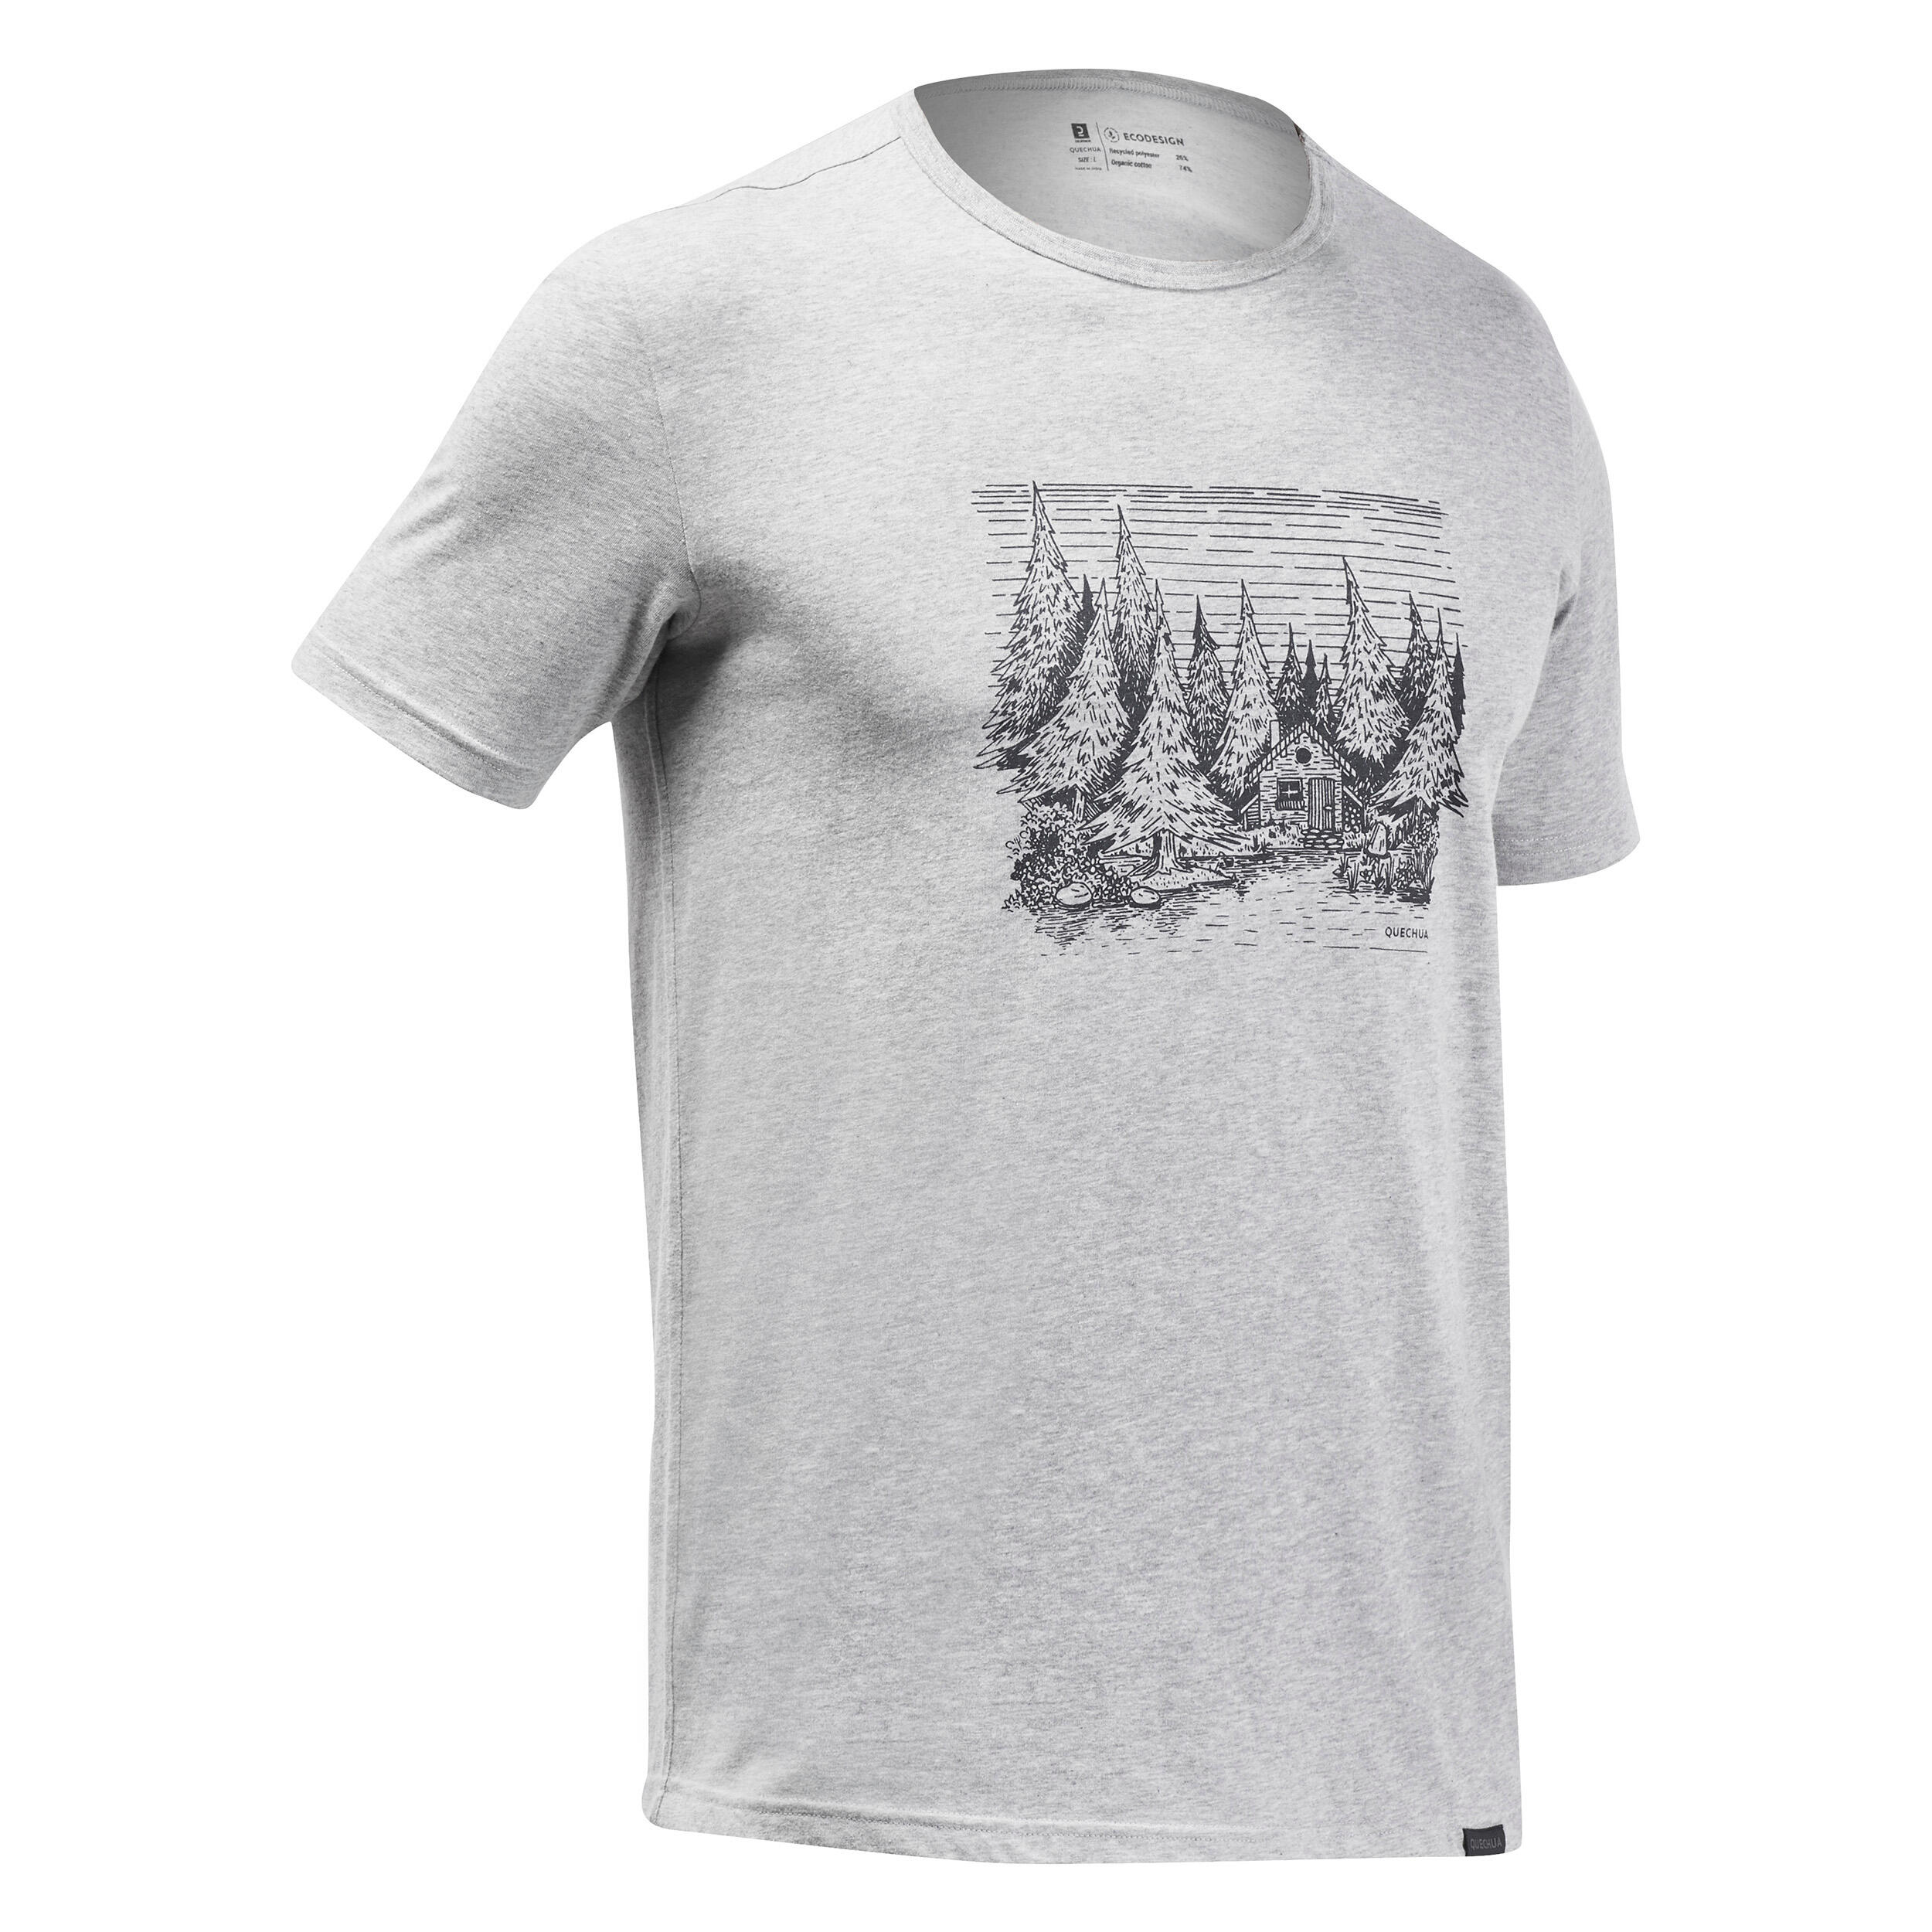 Mens Graphic Tees Nature Tshirt Men an Urban Forest Design Forest T Shirt  Mens/unisex 100% Cotton 